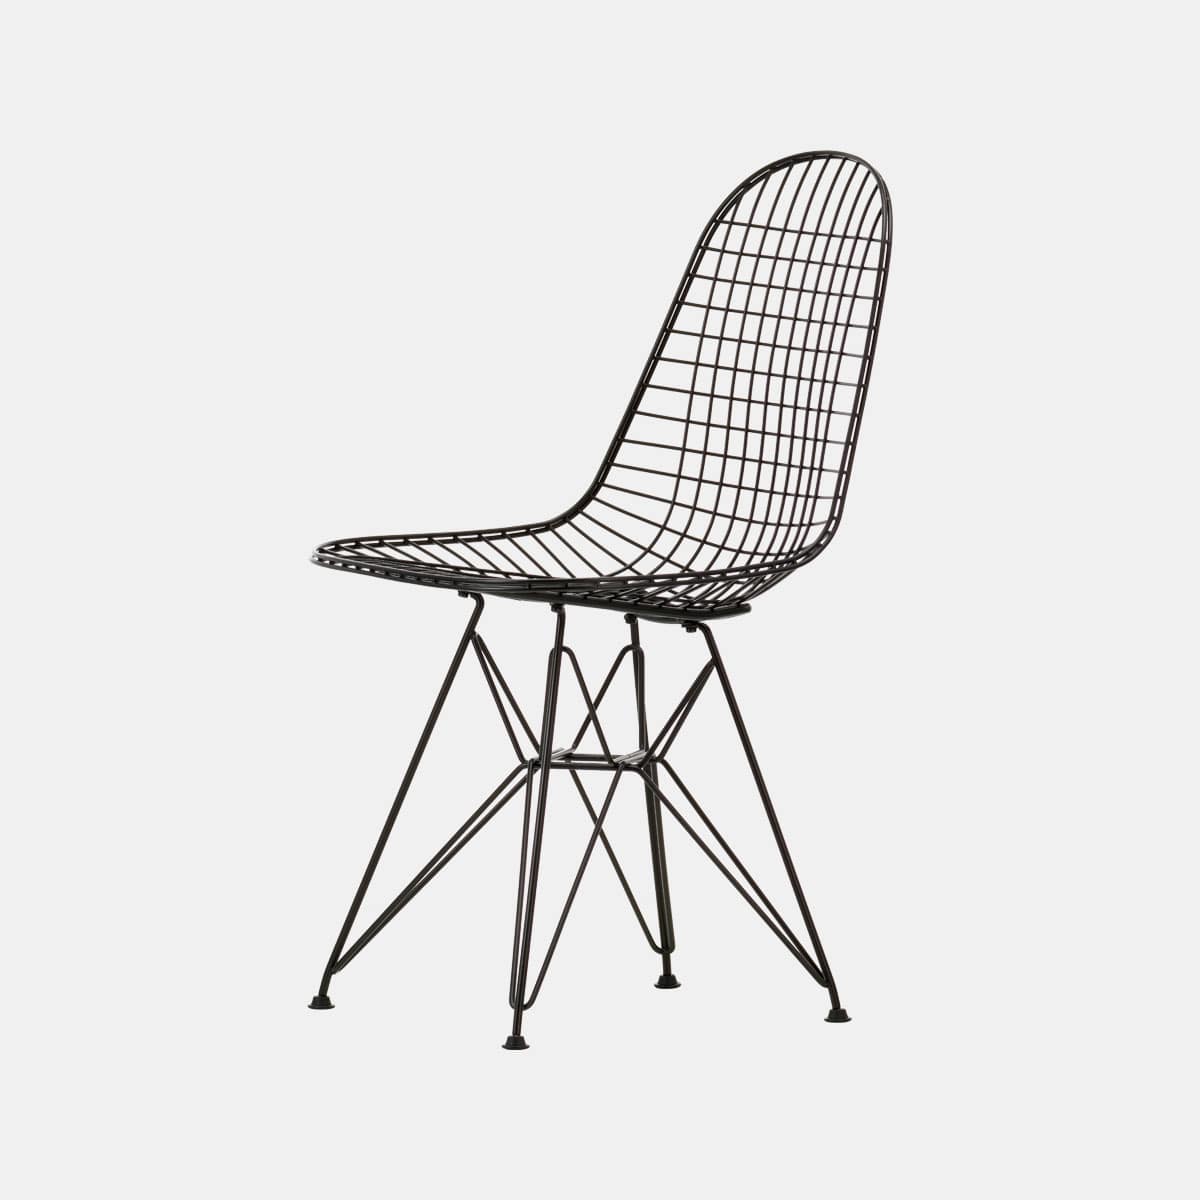 vitra-charles-ray-eames-wire-chair-dkr-basic-dark-001shop